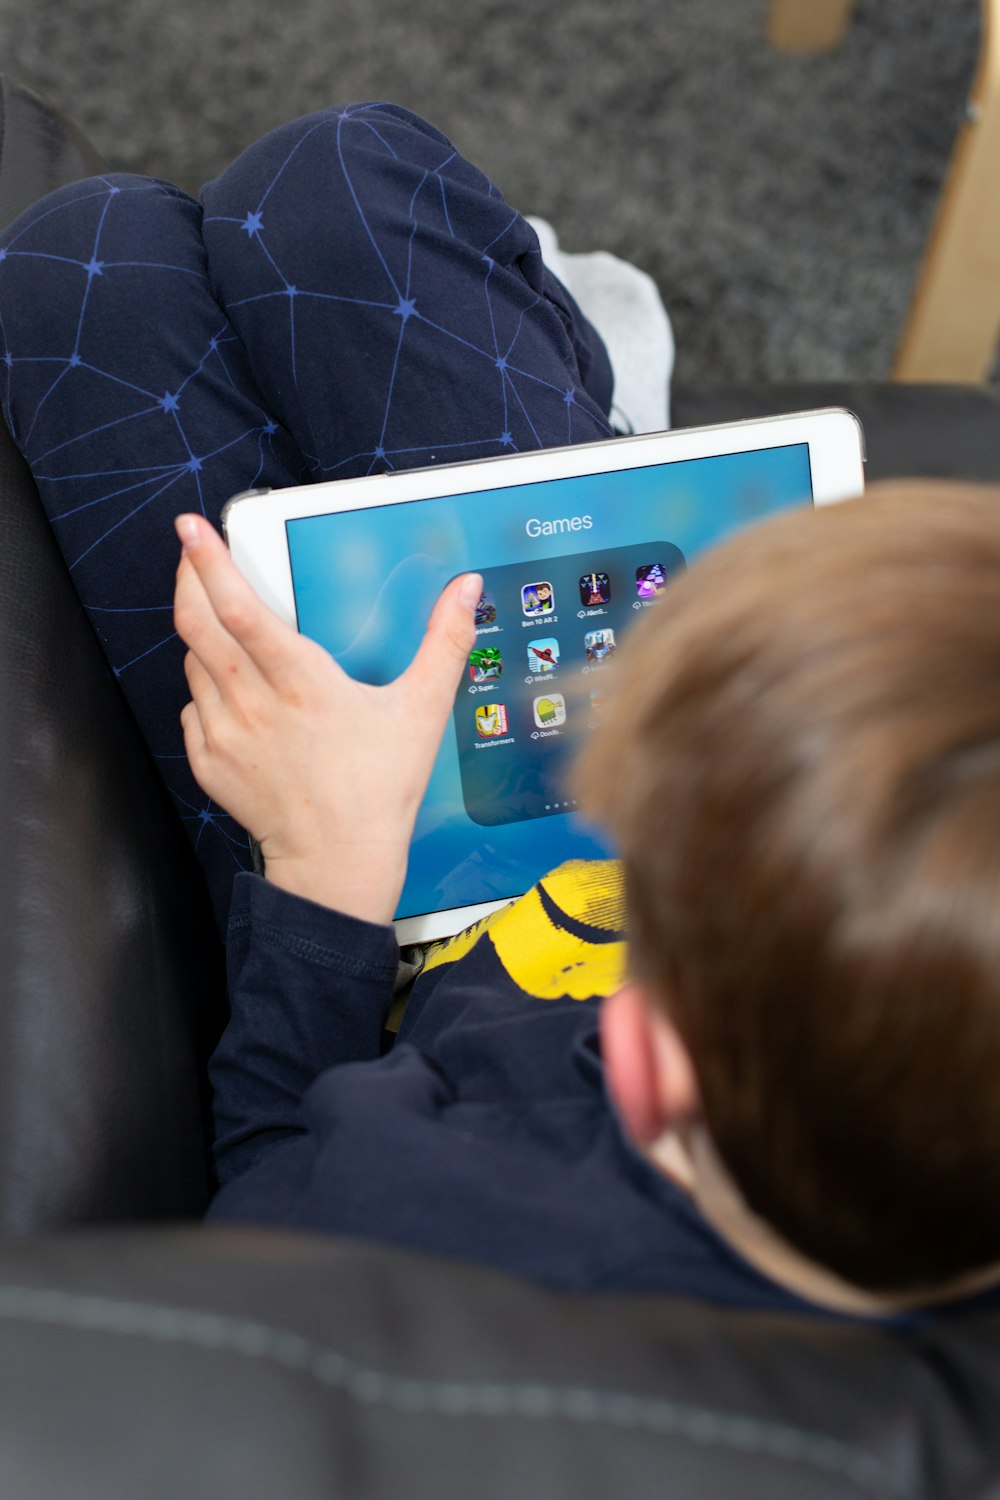 Un giovane ragazzo seduto su un divano che tiene in mano un tablet